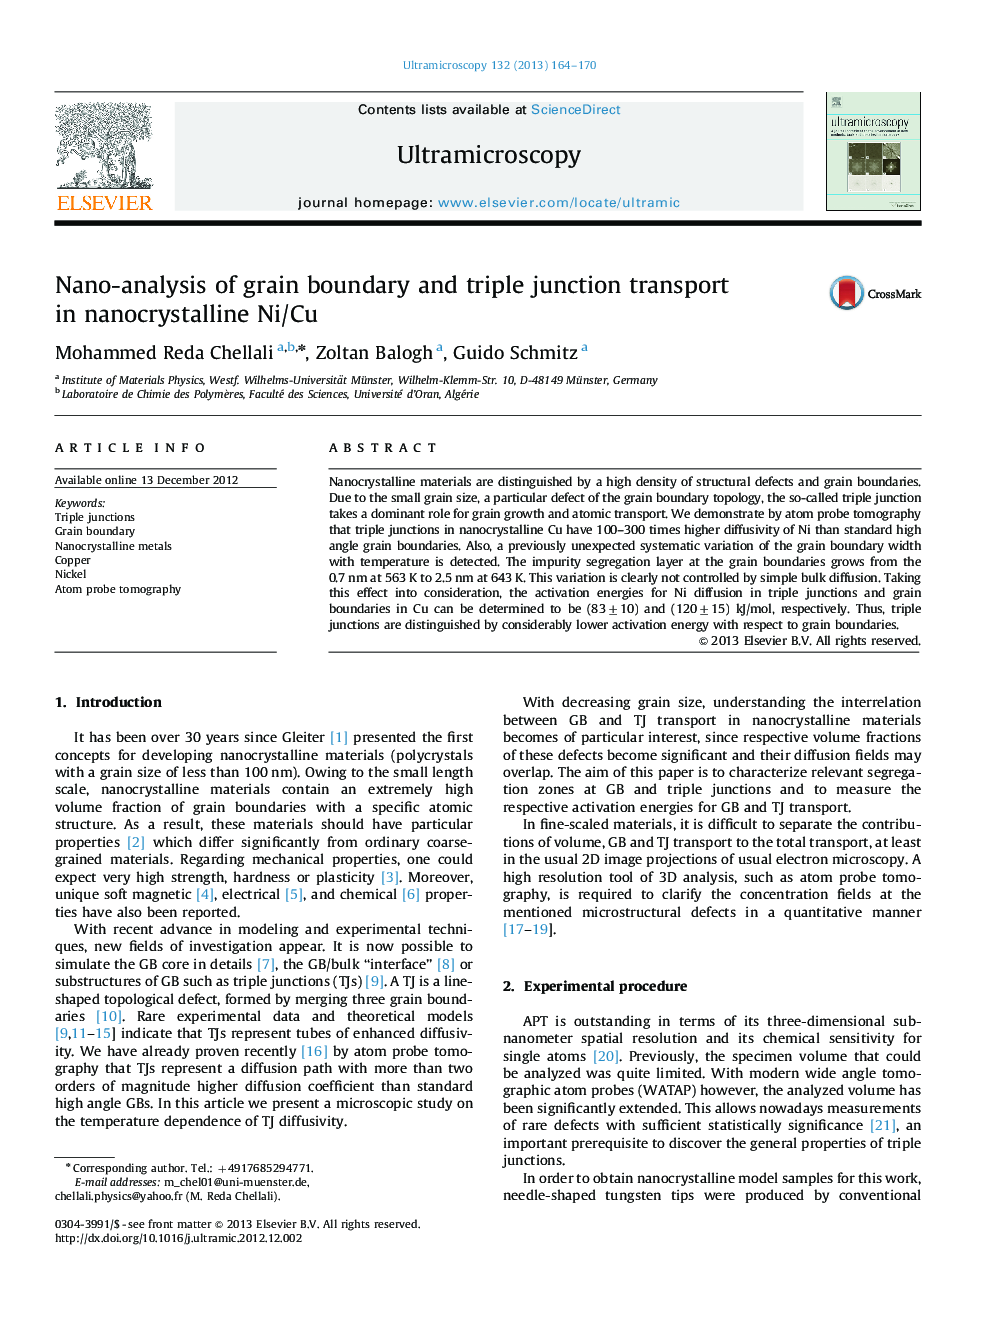 Nano-analysis of grain boundary and triple junction transport in nanocrystalline Ni/Cu